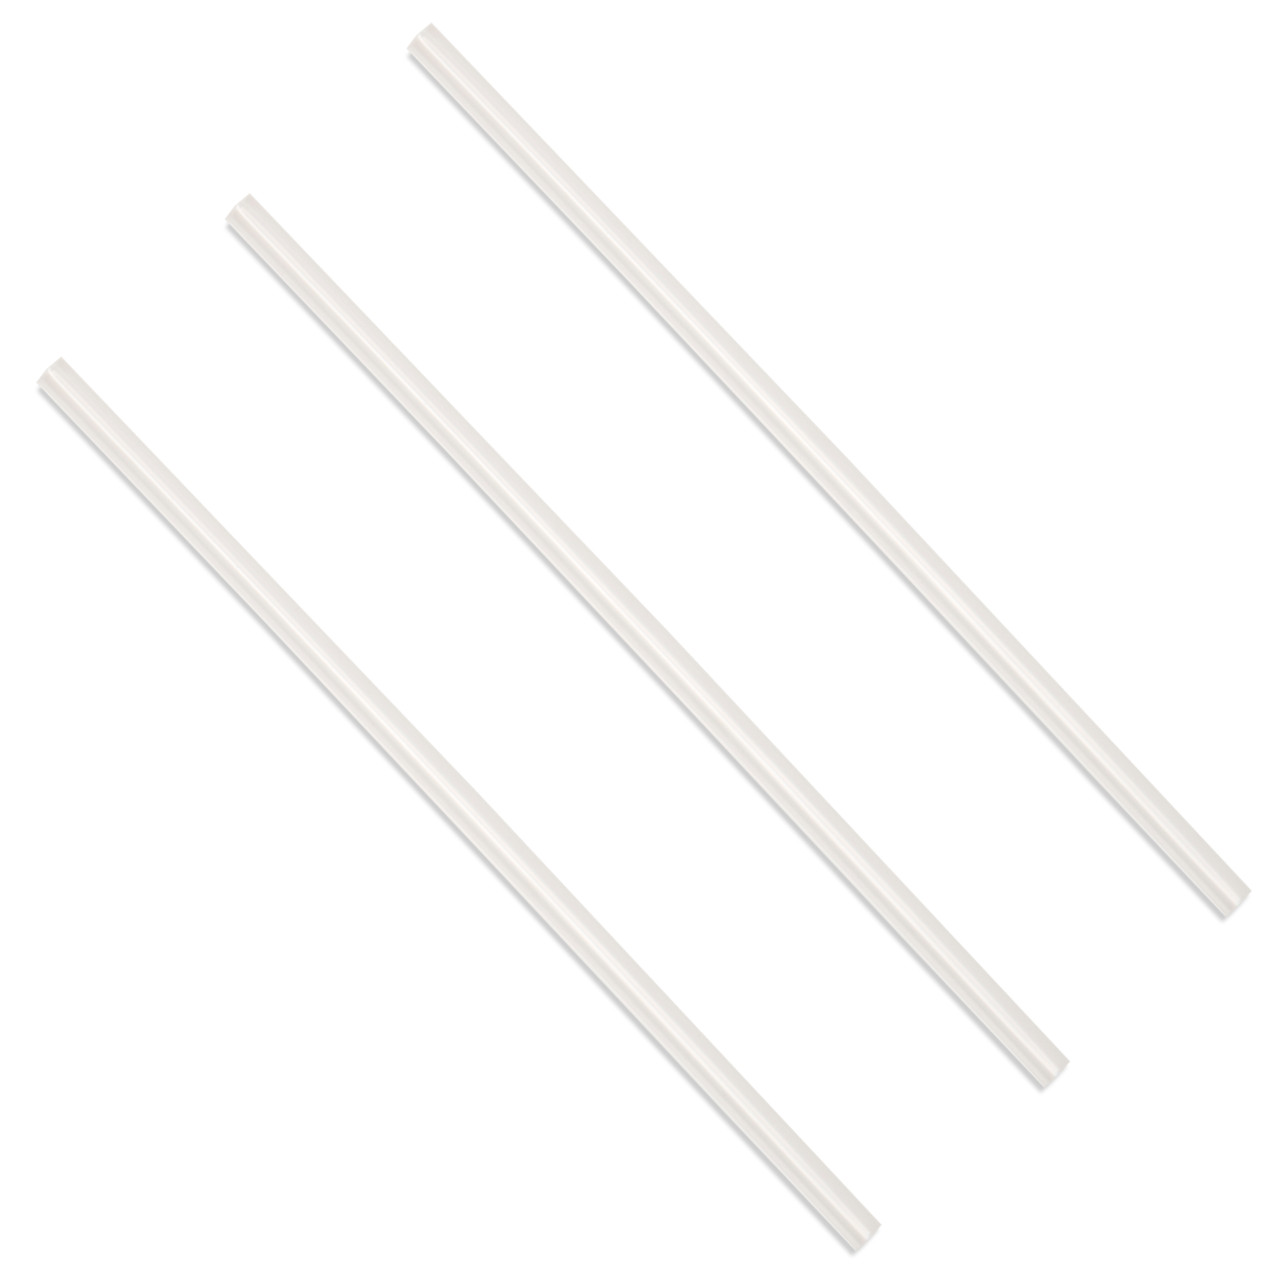 Straight Jumbo Straw (200x6mm/8") Clear (Biodegradable)